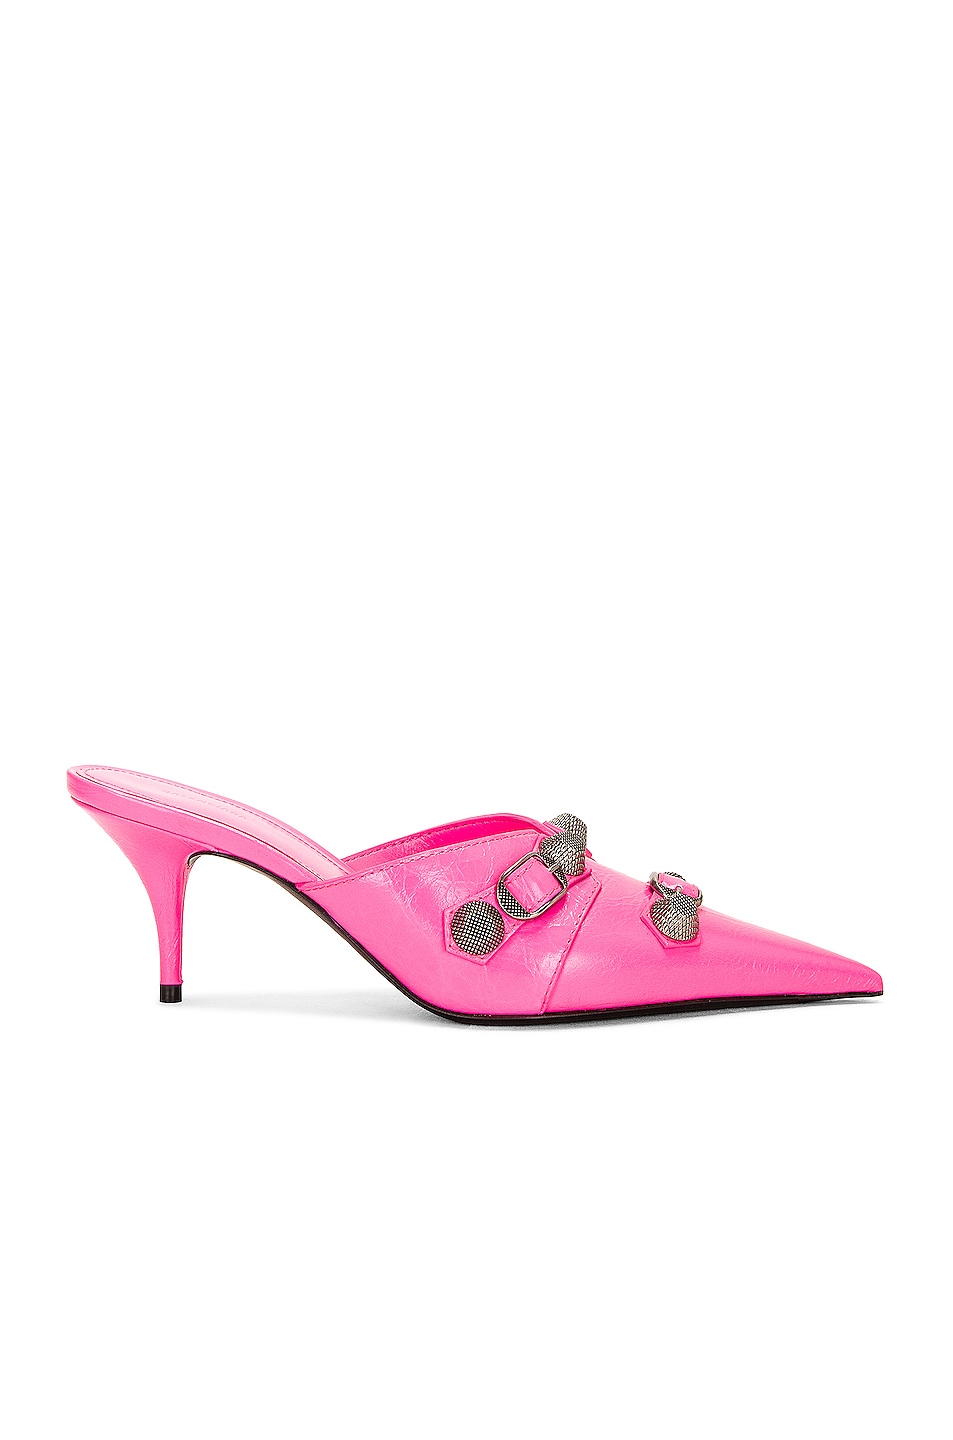 Balenciaga Cagole Mule in Fluo Pink | FWRD